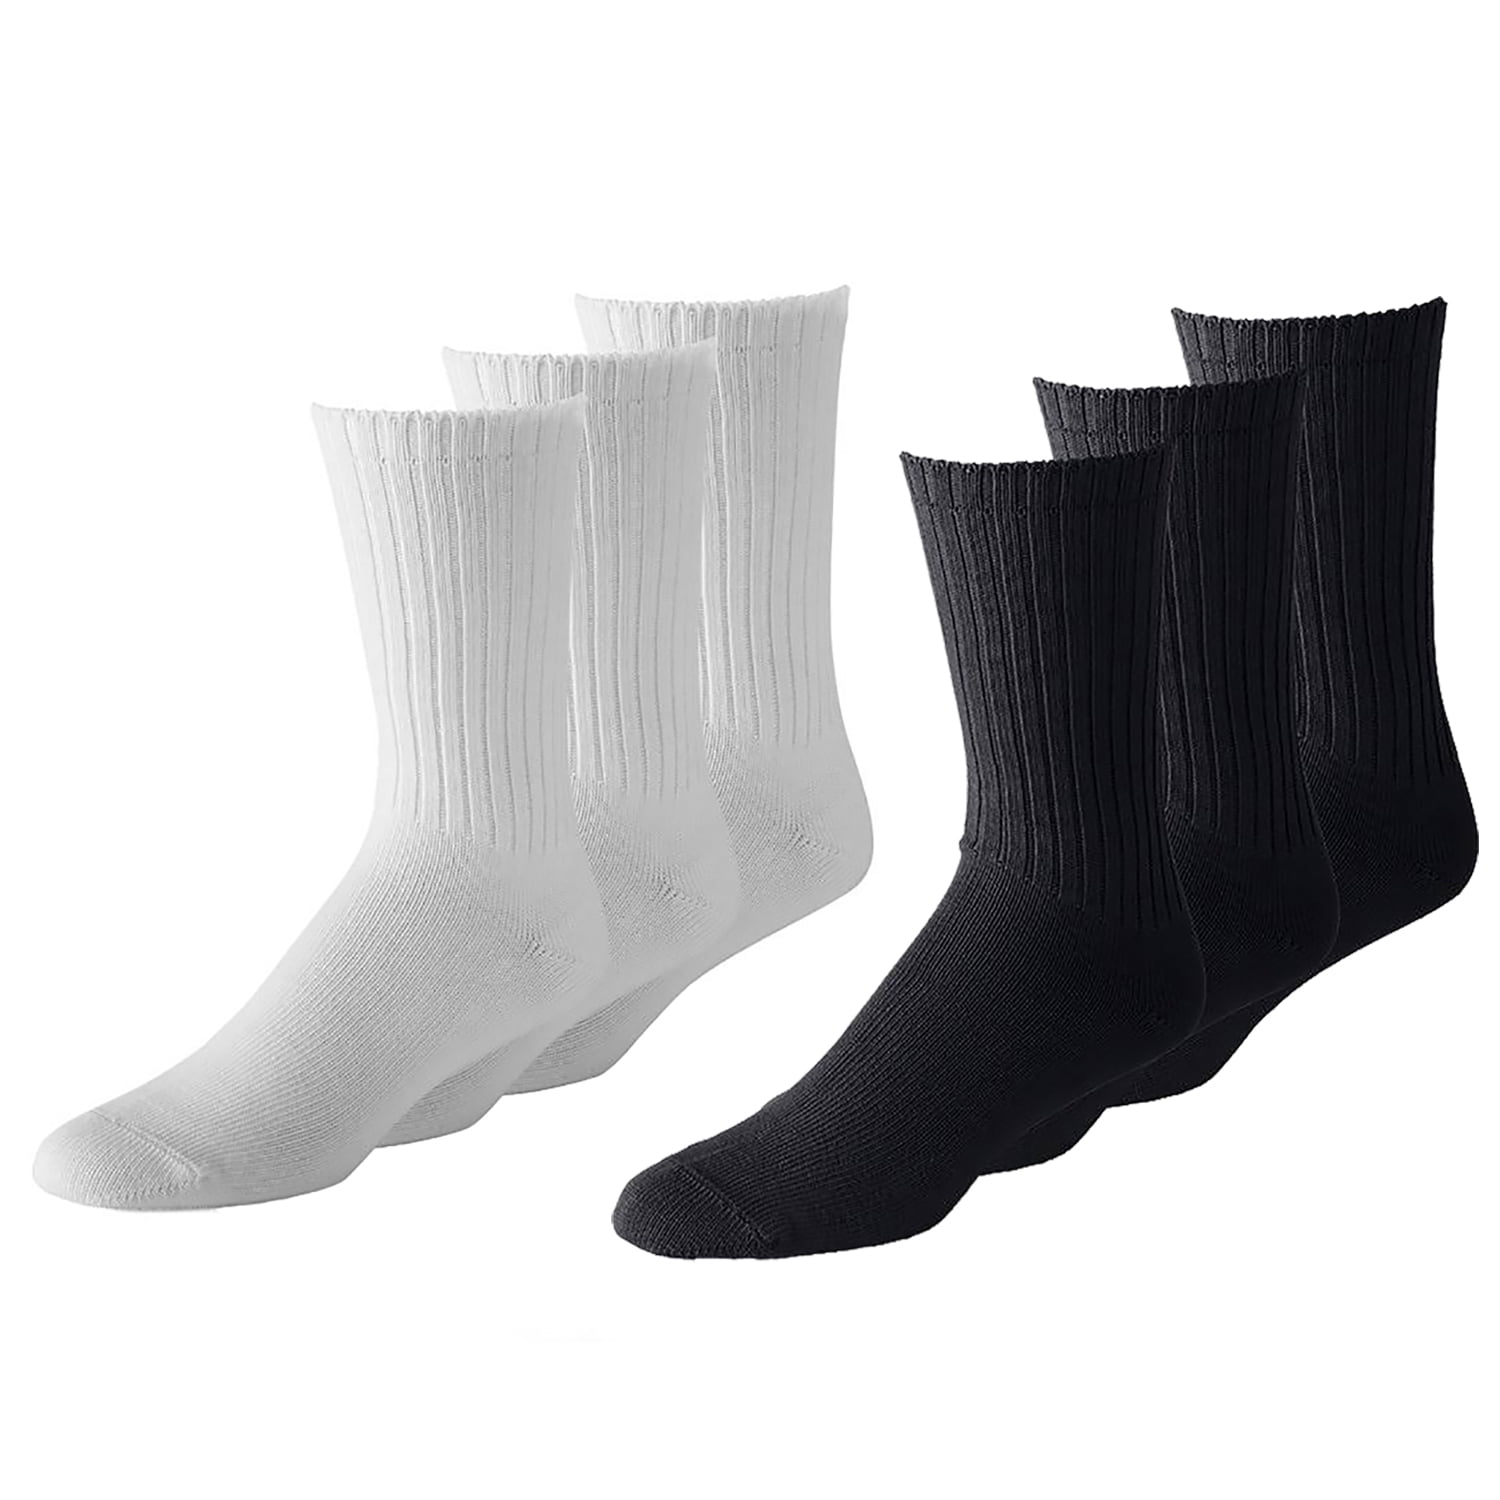 Socks White Color Dress Socks 6 Pairs Lot Wholesale Spandex Size 9-11 Sport Crew 